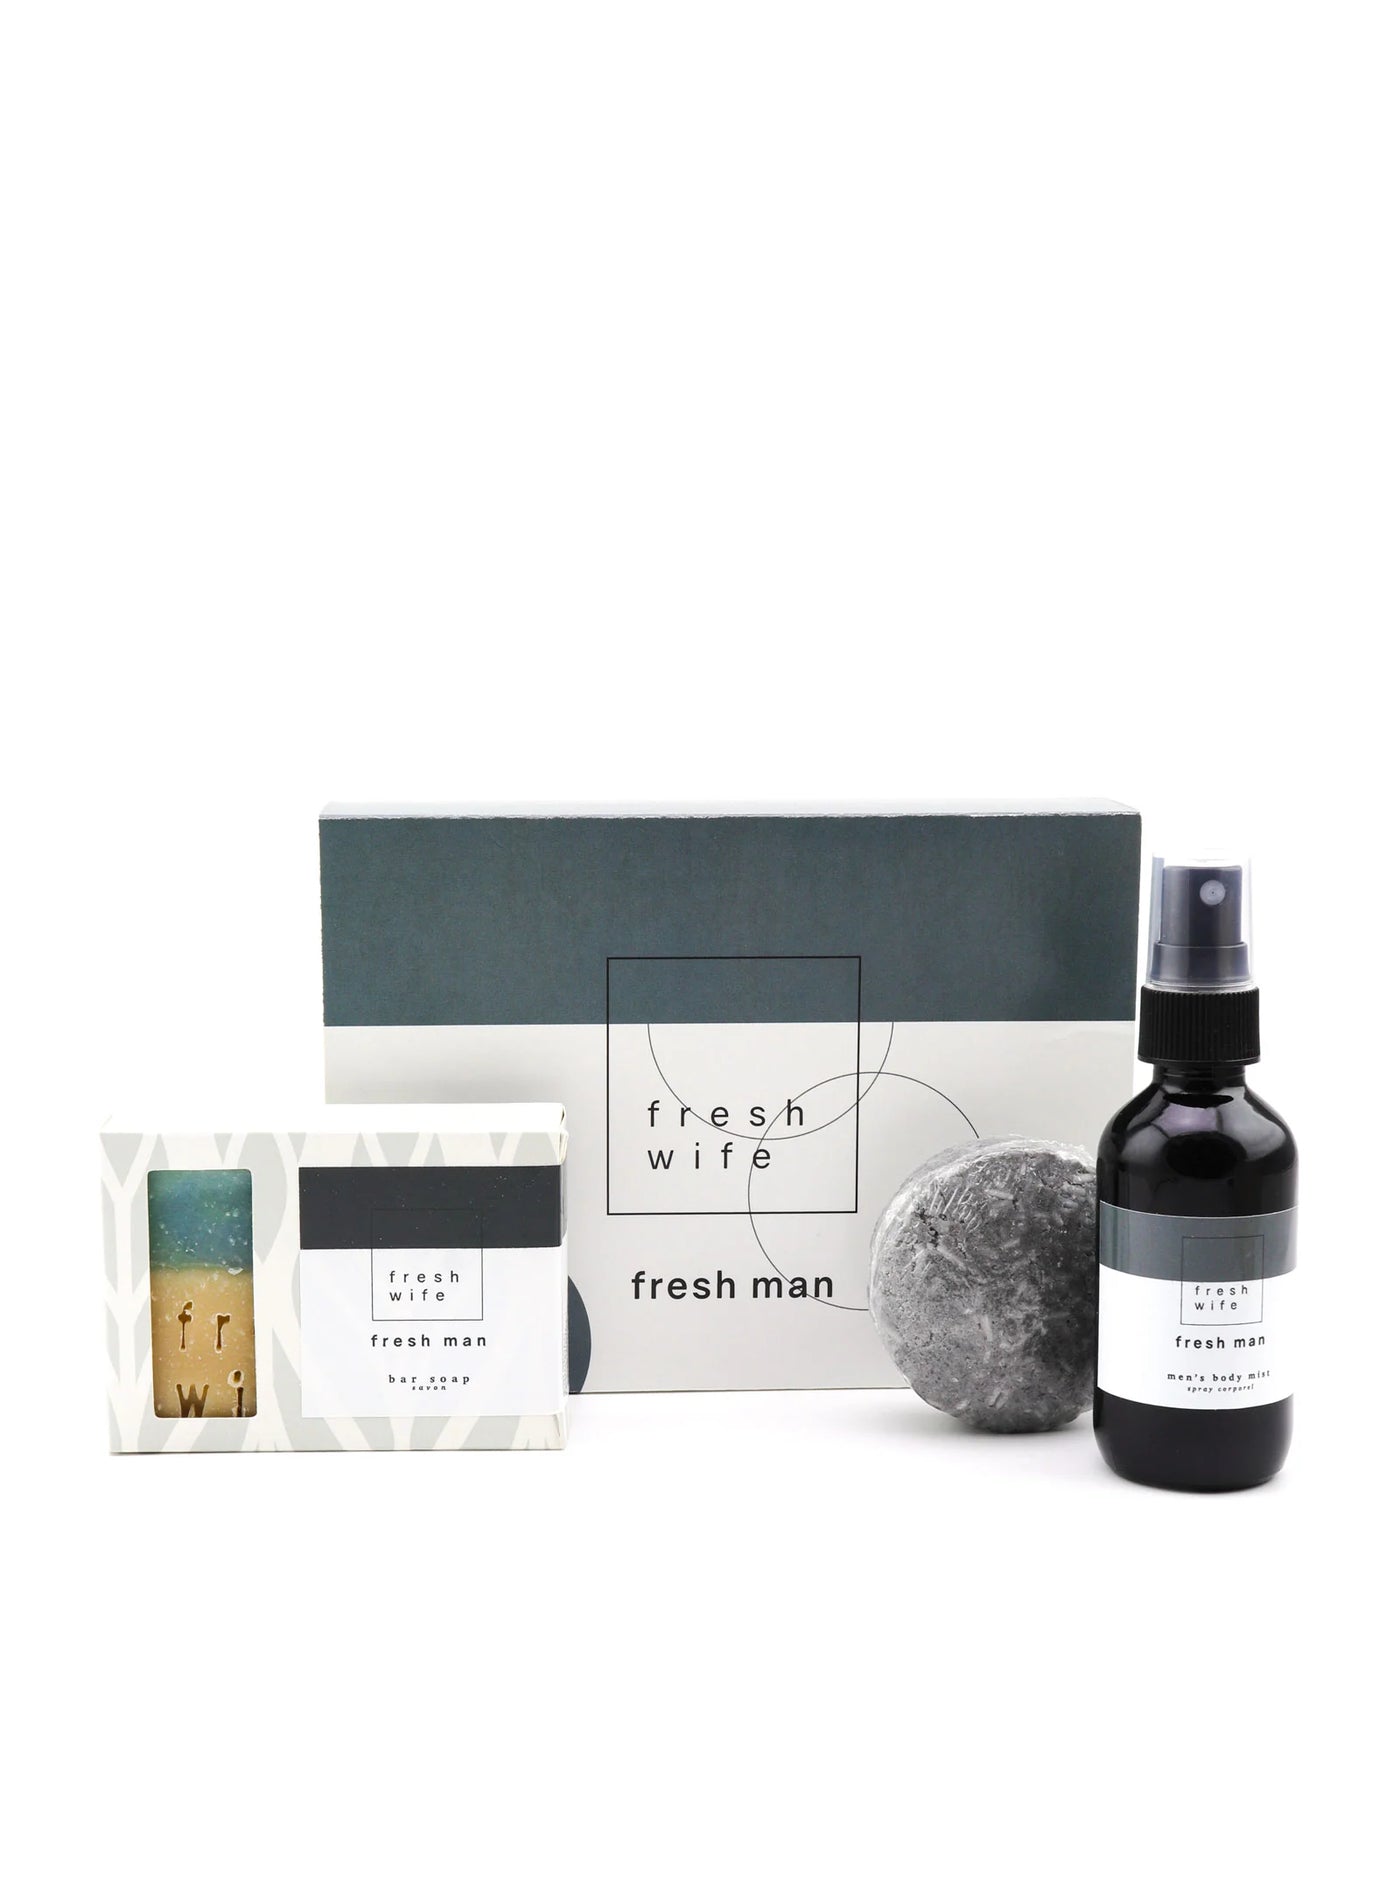 The Fresh Wife Soap Company - Fresh Man Gift Set